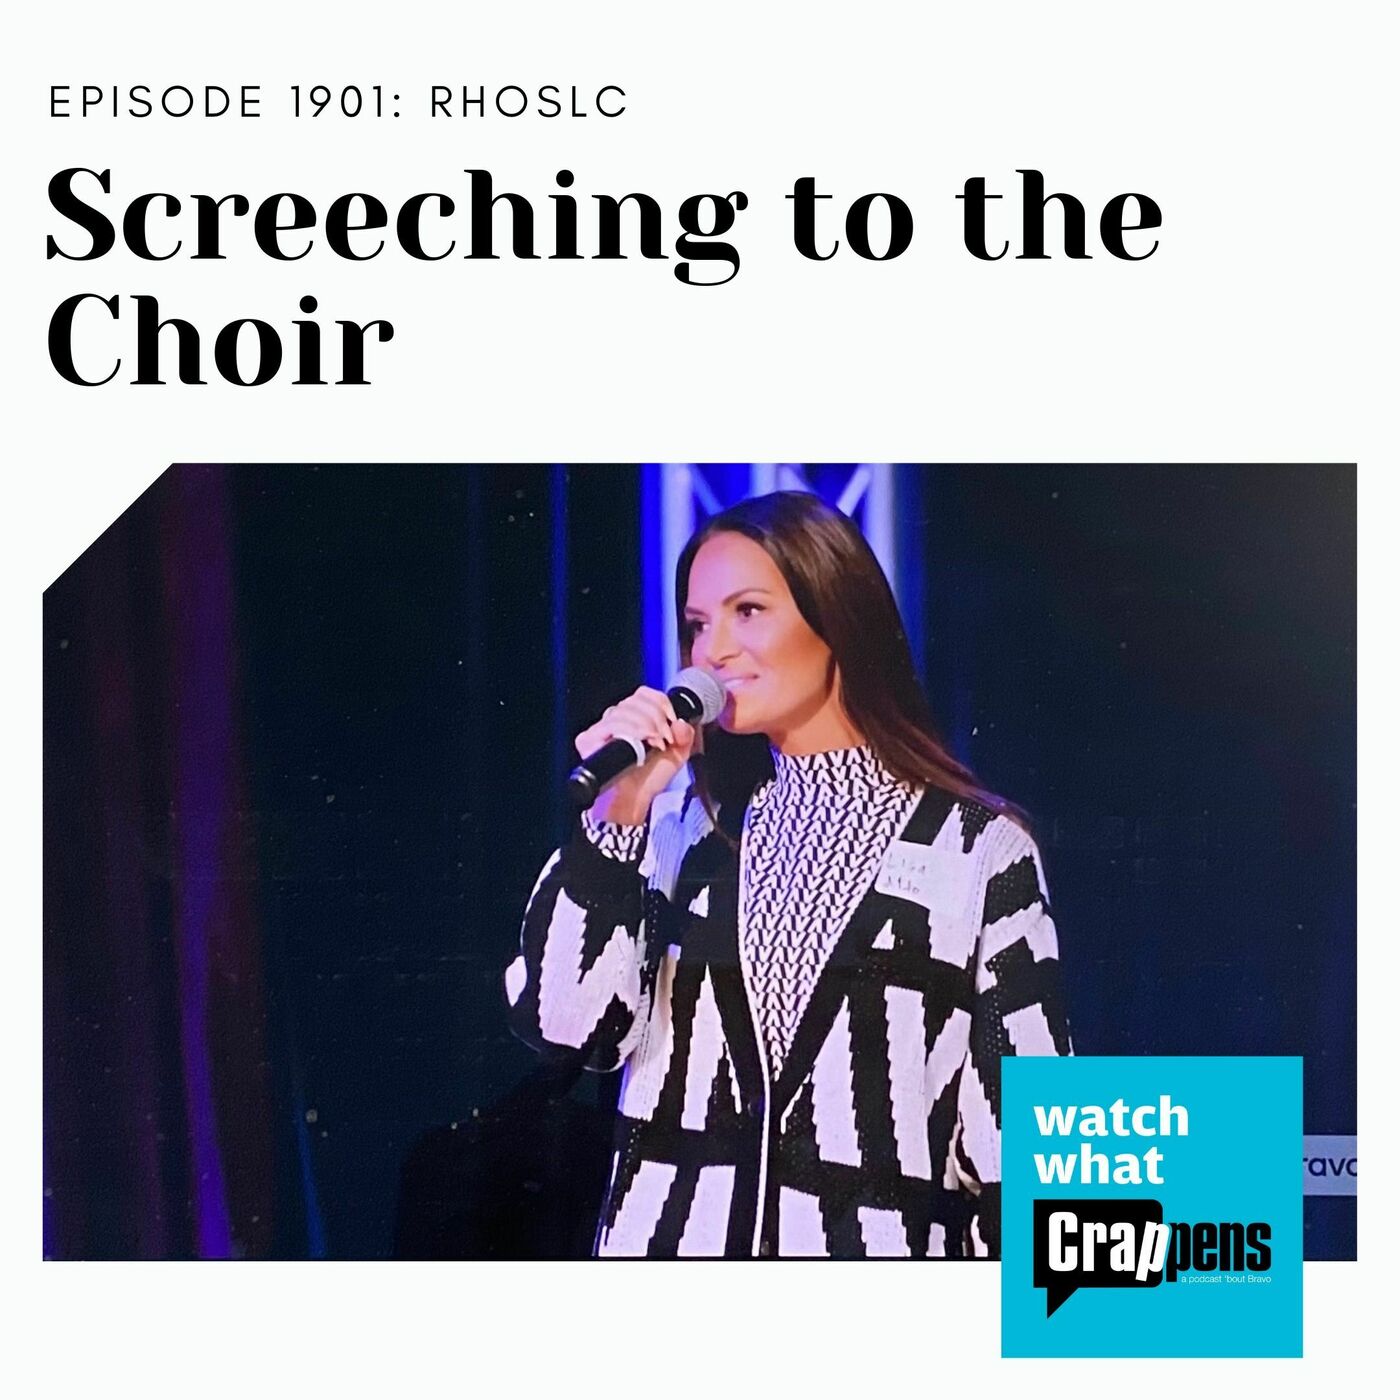 RHOSLC: Screeching to the Choir